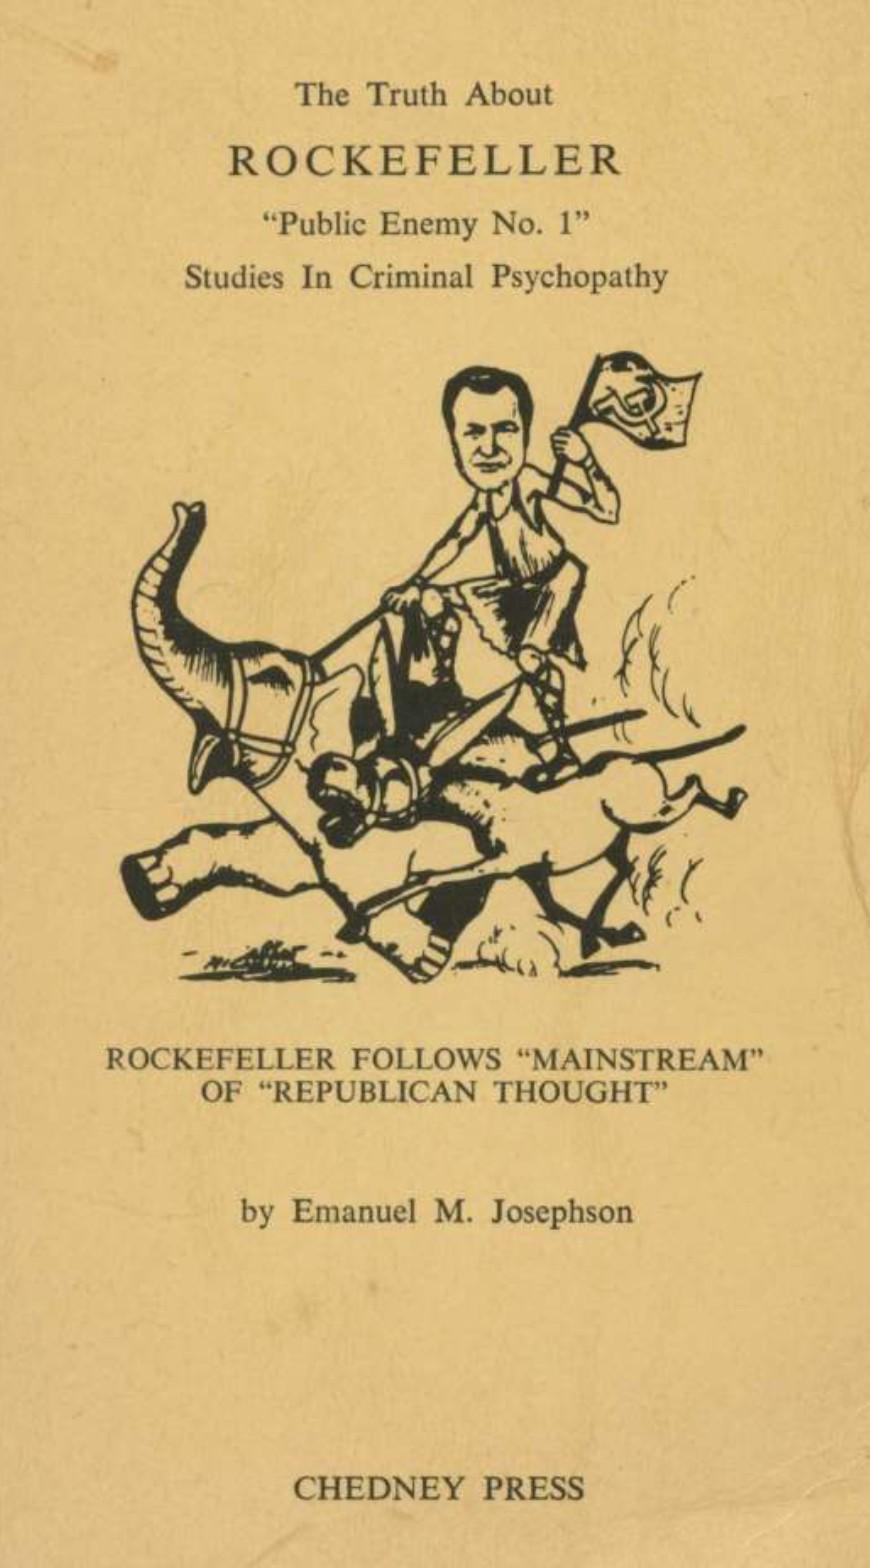 Truth About Rockefeller (Public Enemy No 1, Studies in Criminal Psychopathy) (1964) by Emanuel M. Josephson